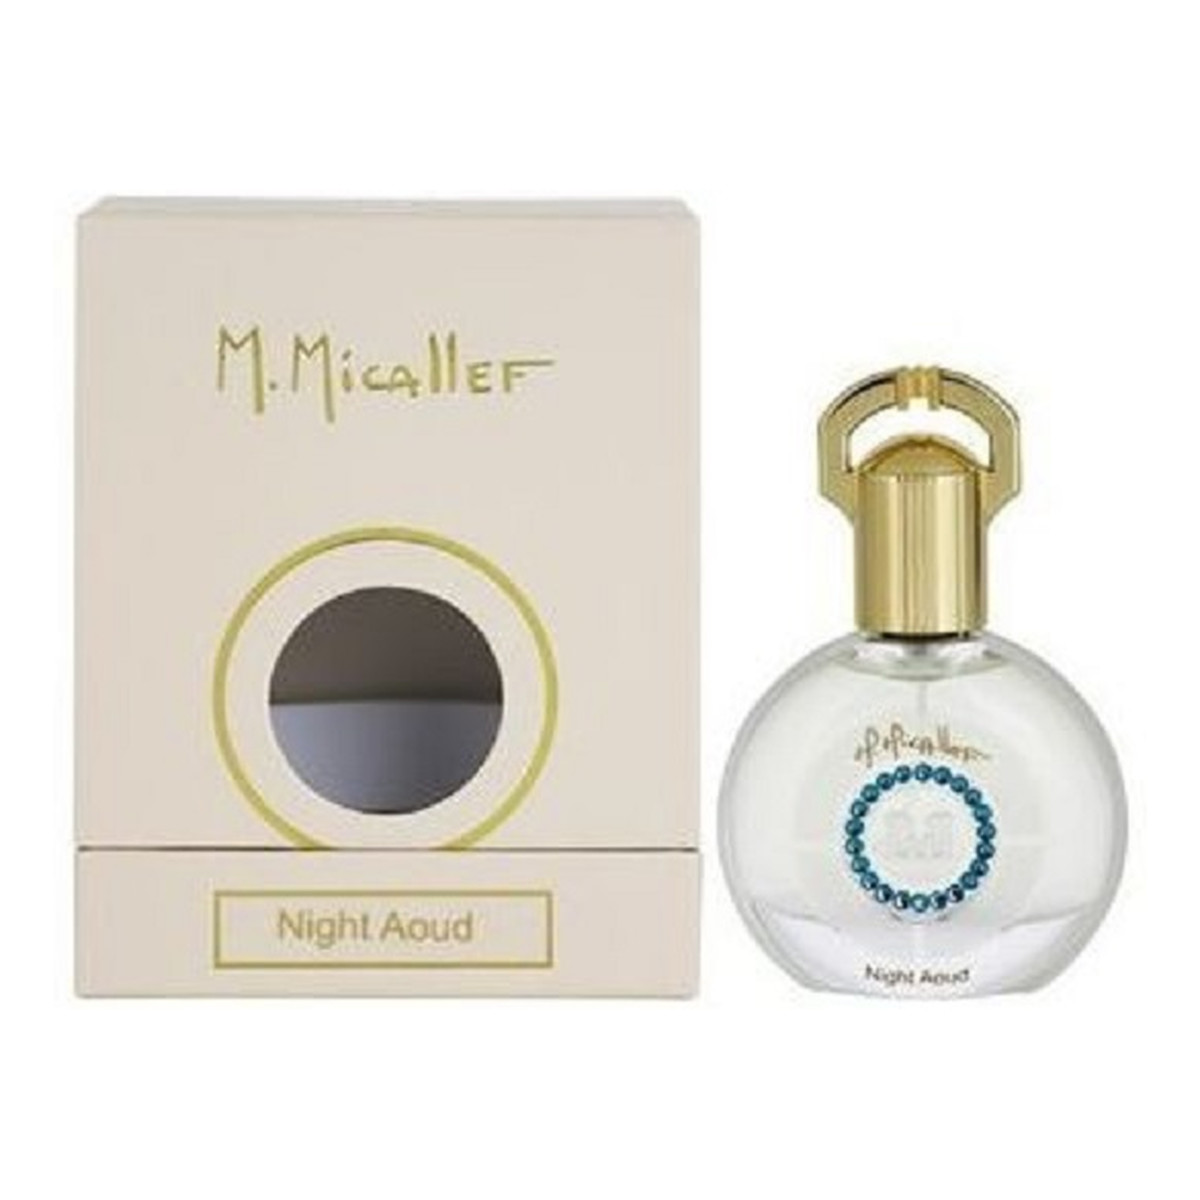 M. Micallef Night Aoud woda perfumowana 30ml